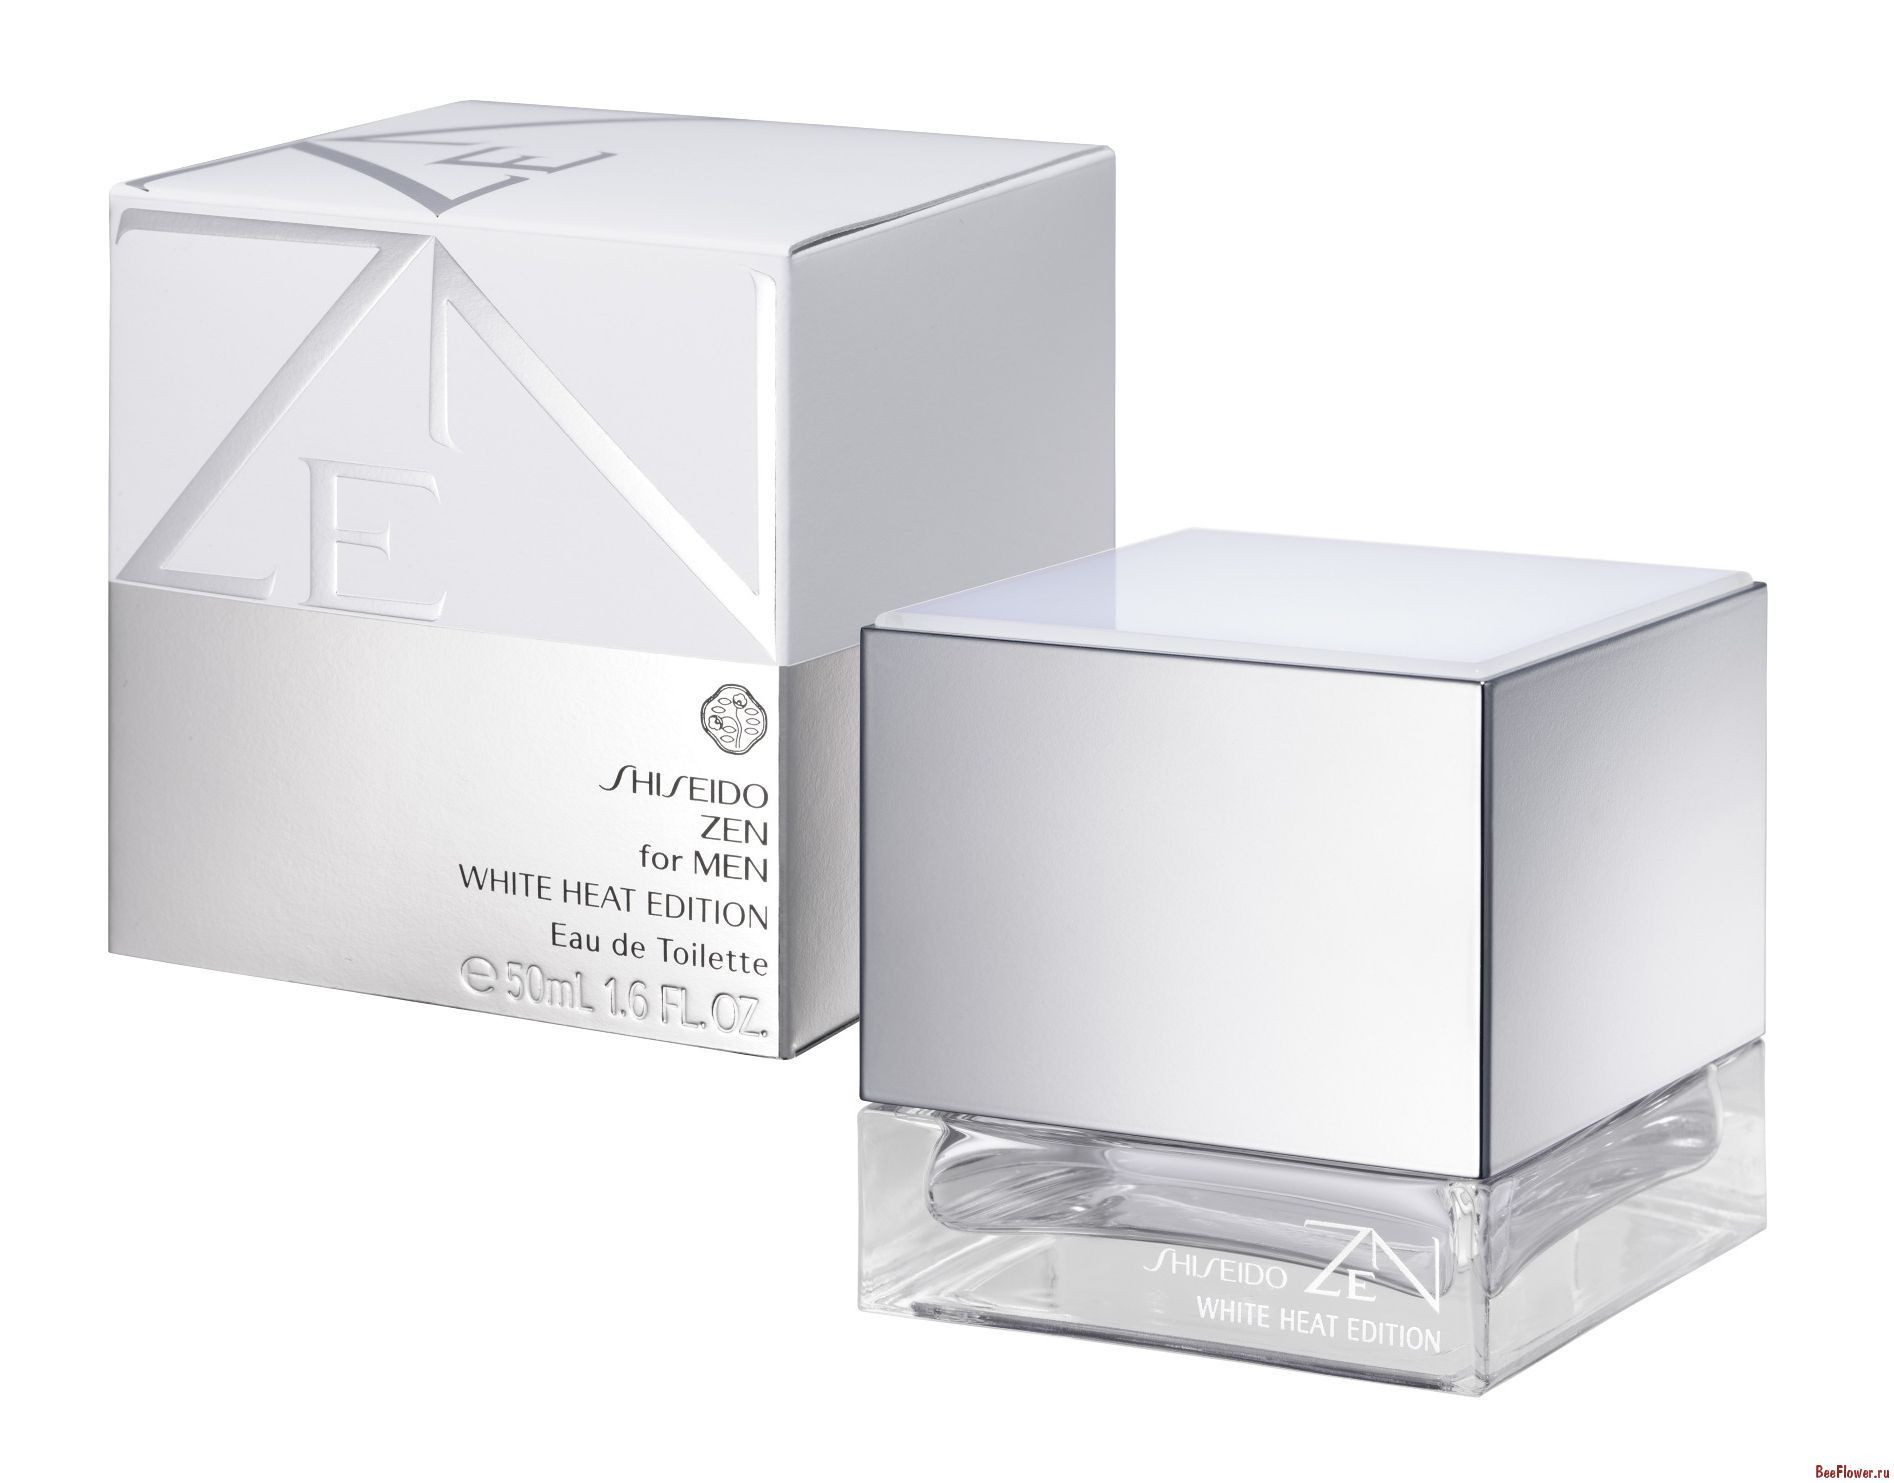 Shiseido Zen White Heat Edition